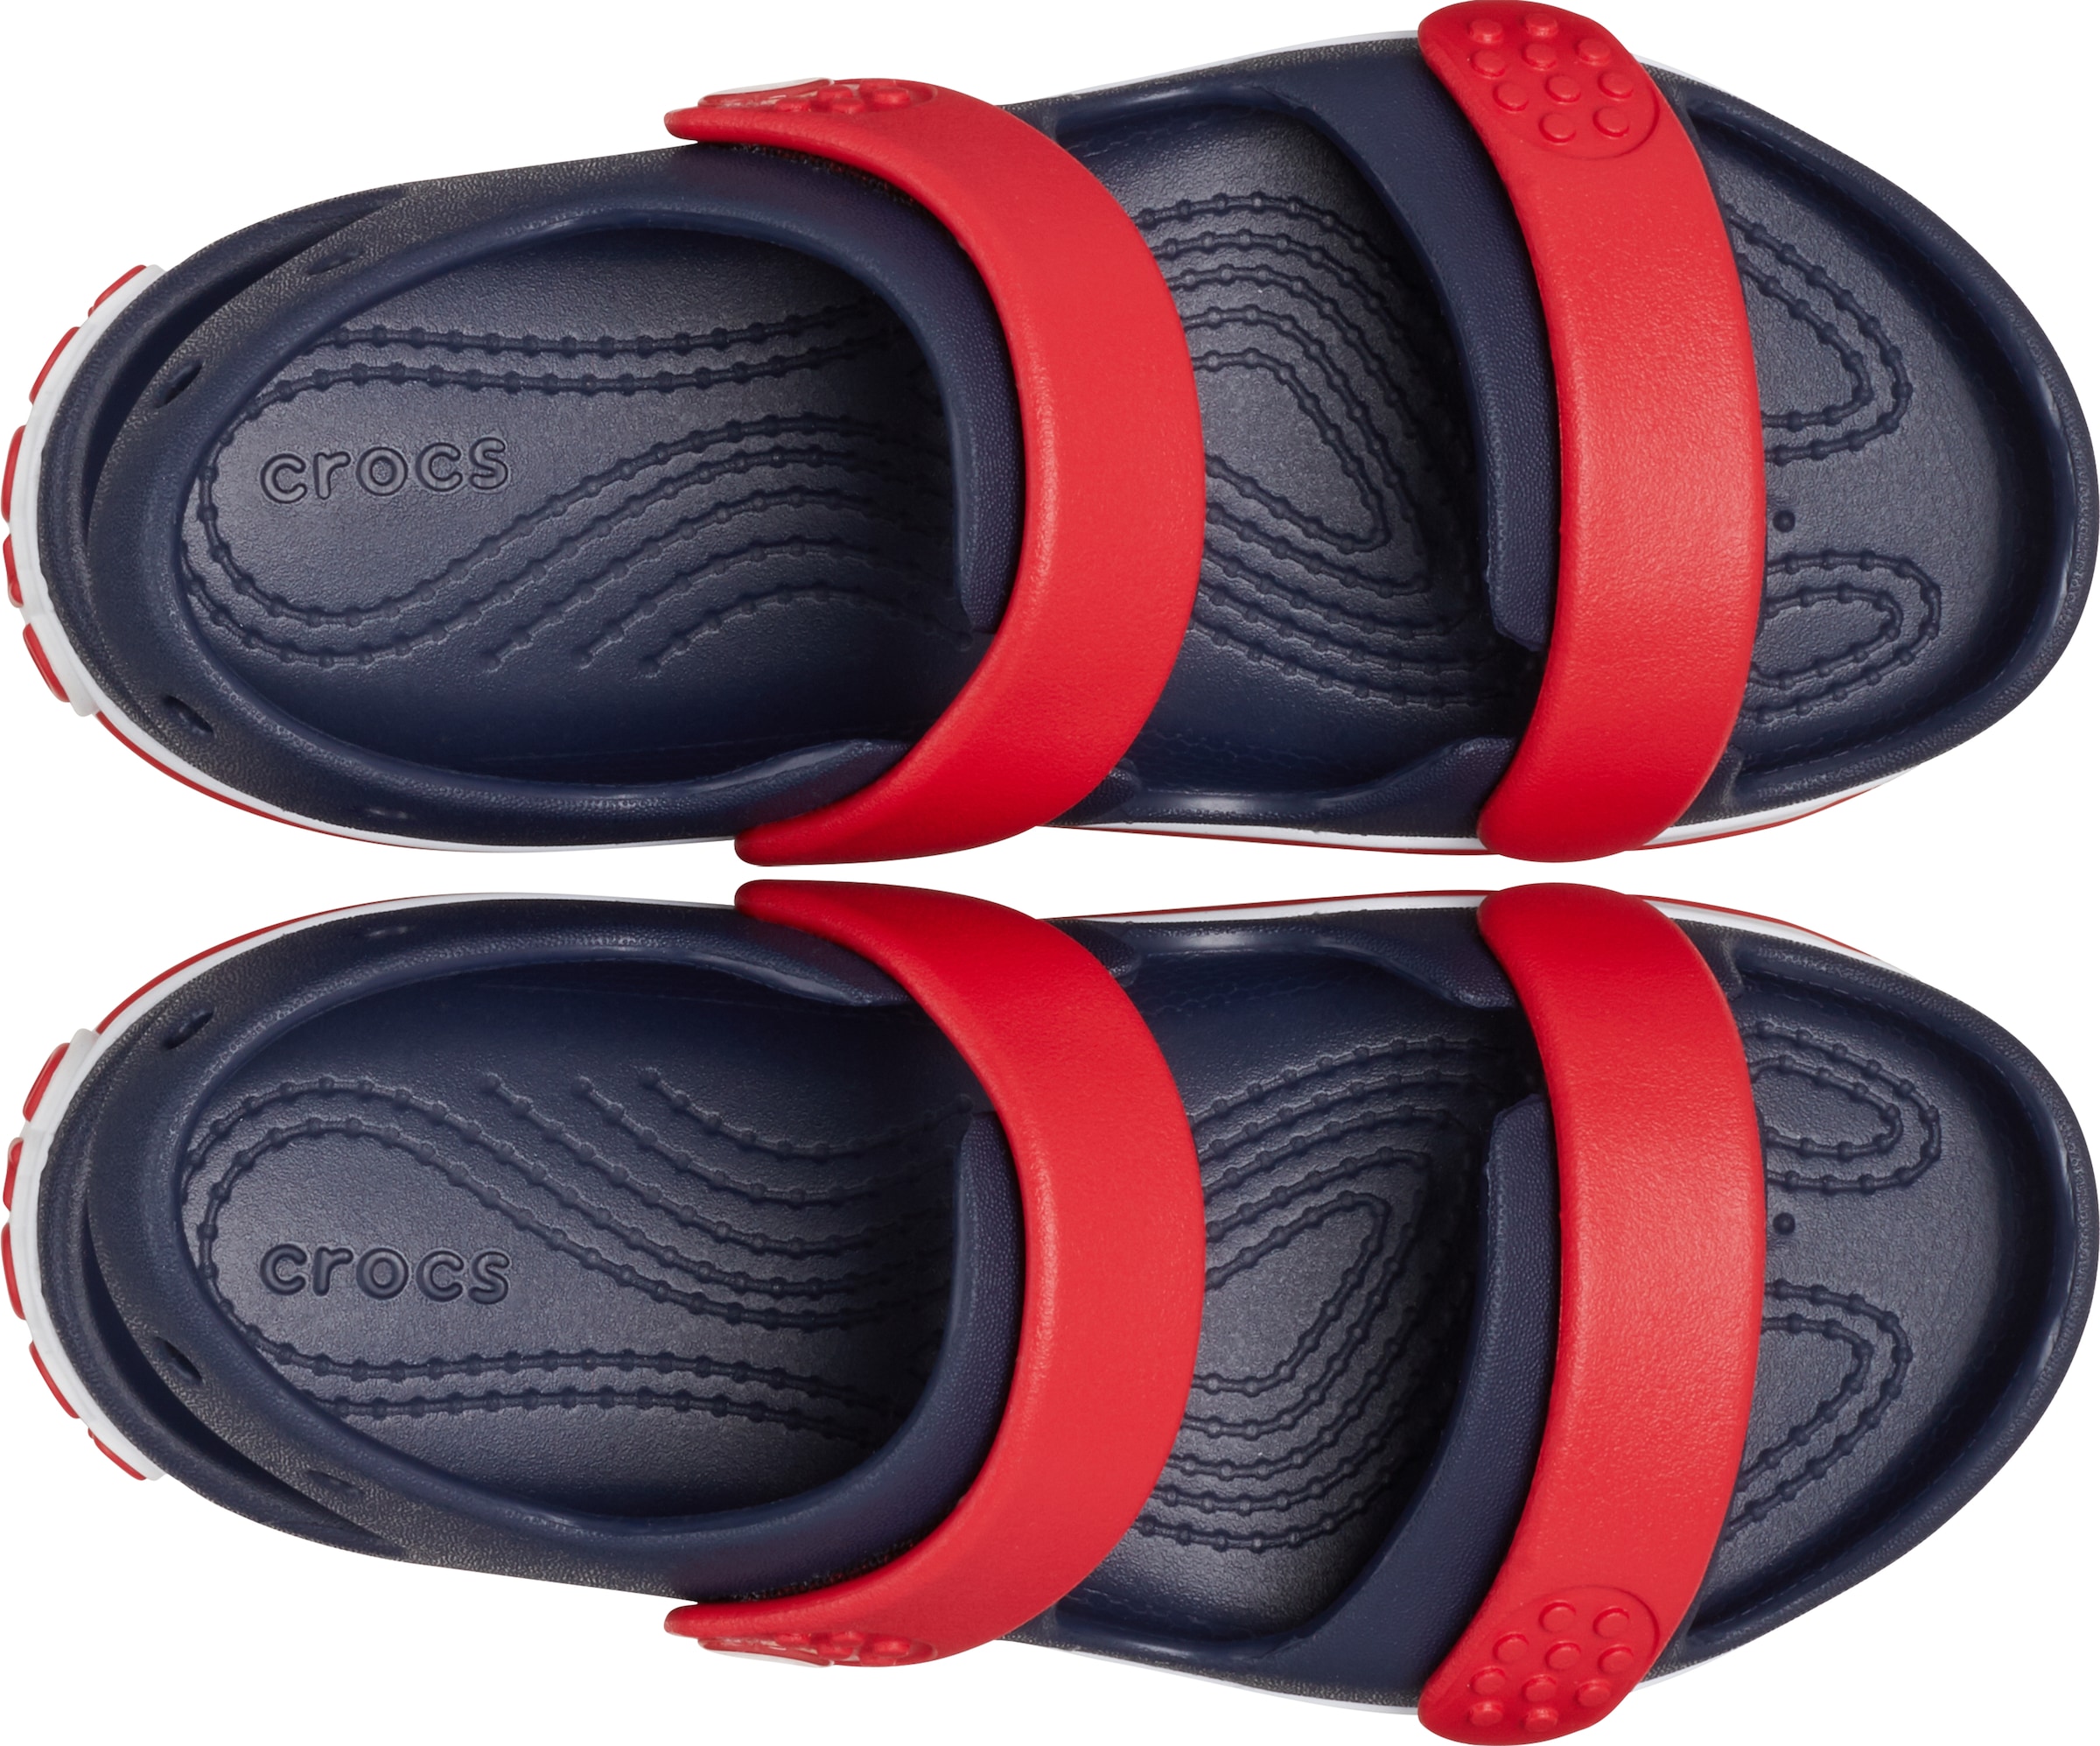 Crocs Sandale »Crocband Cruiser Sandal«, Sommerschuh, Sandalette, Riemchensandale, mit Fersenriemen